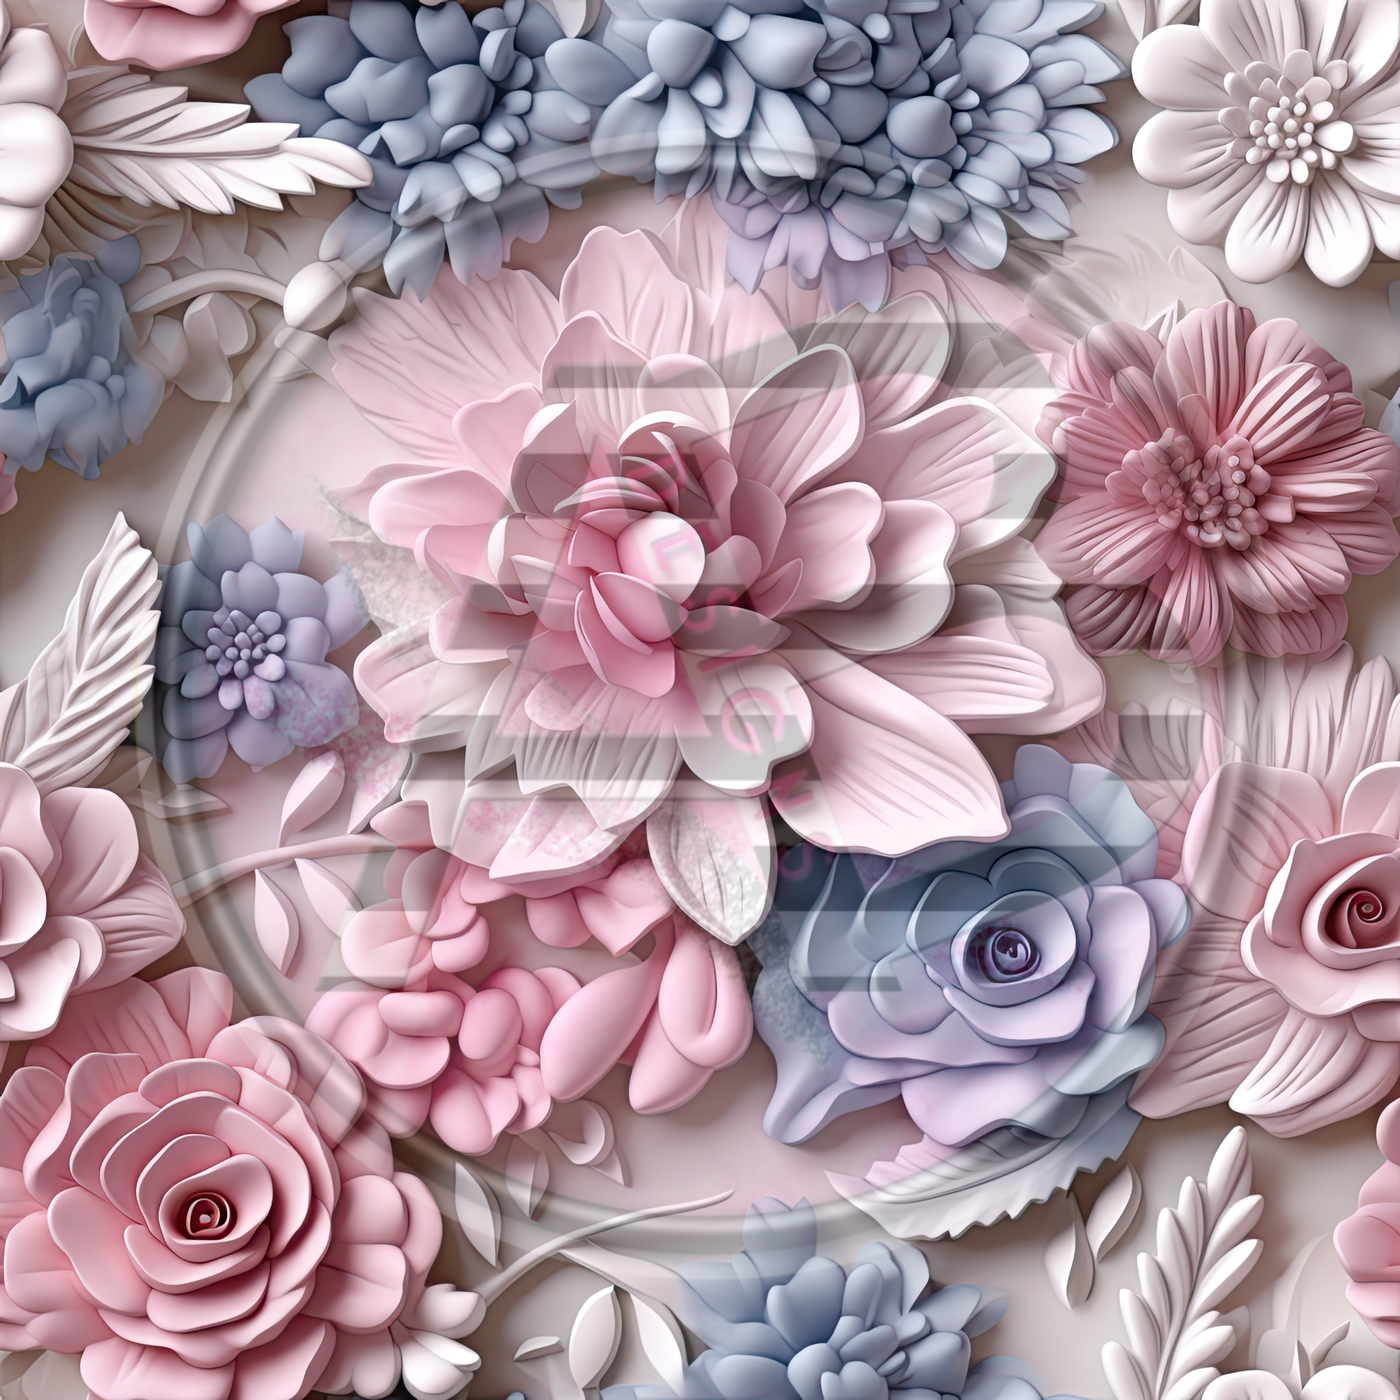 Adhesive Patterned Vinyl - 3D Floral 10